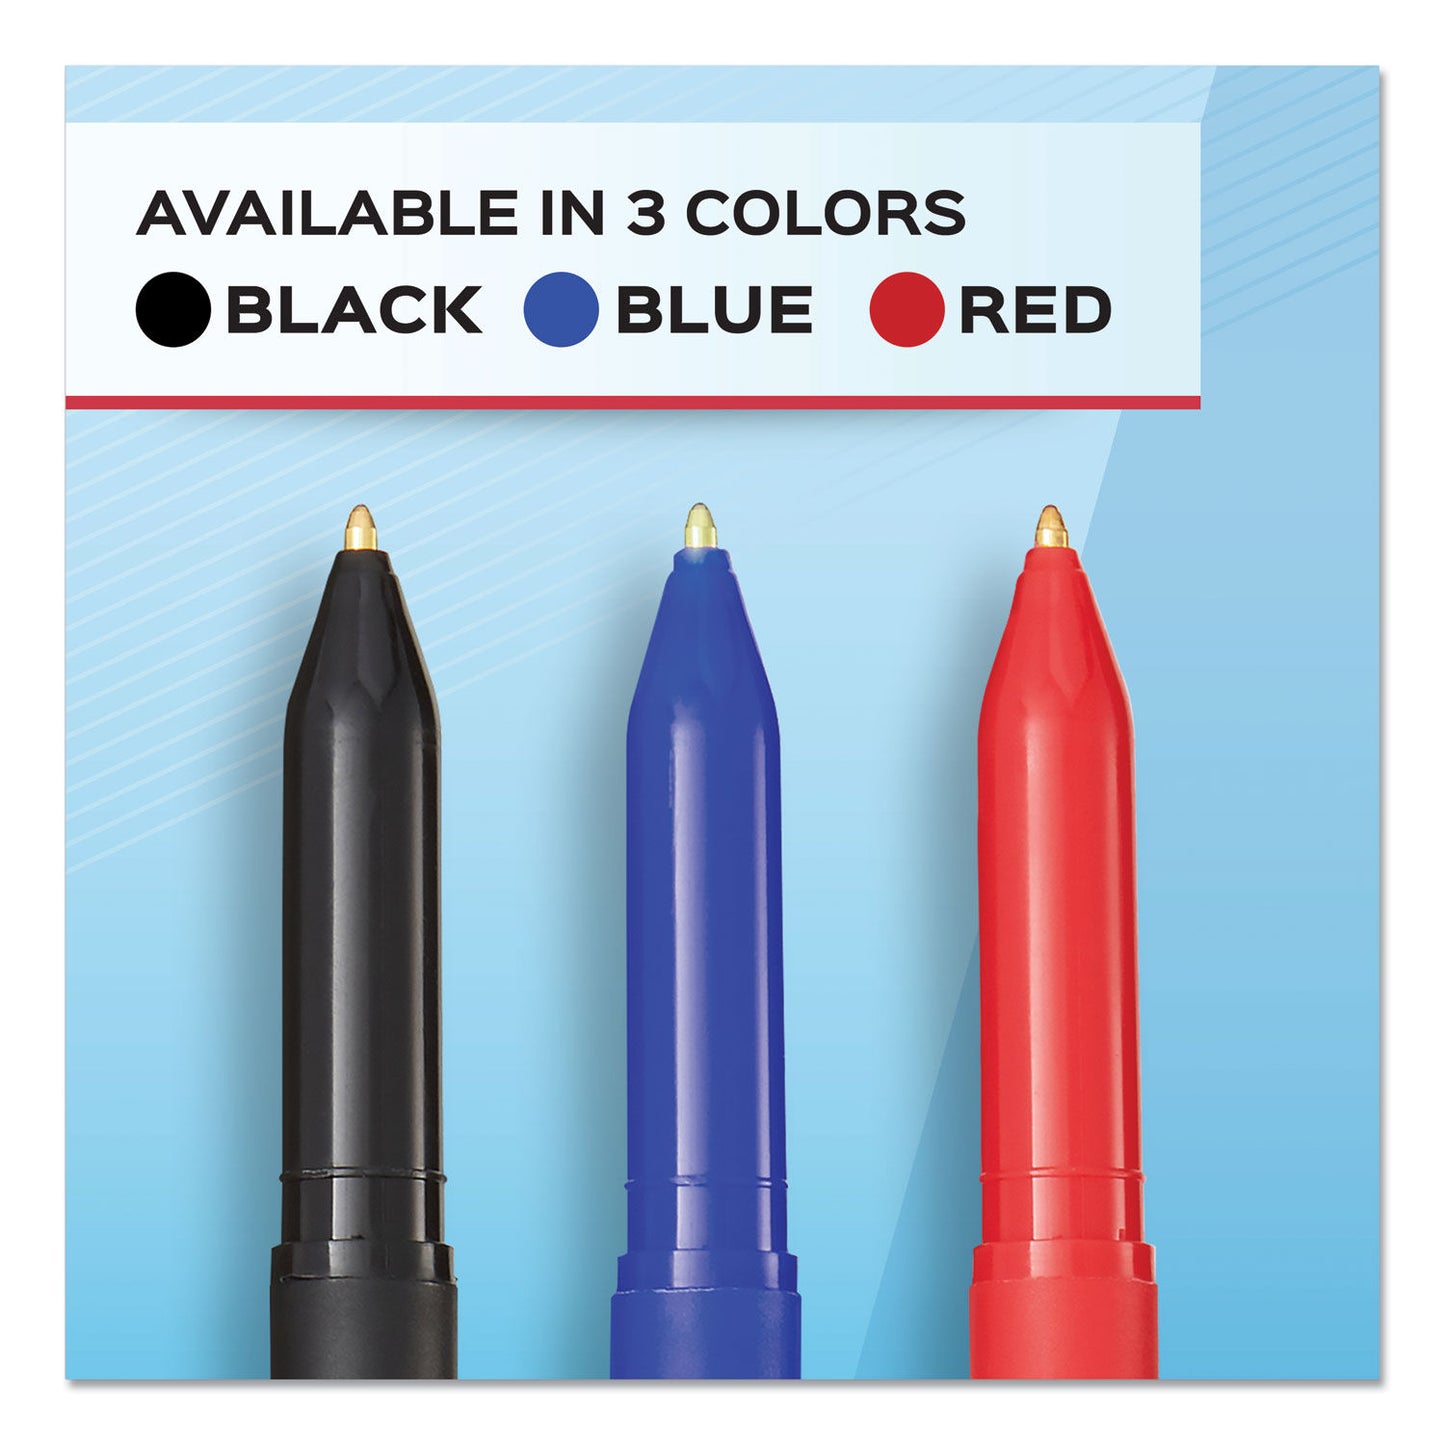 Paper Mate Write Bros Stick Ballpoint Pen Medium Point 1mm Blue Ink (12 Count) 3311131C